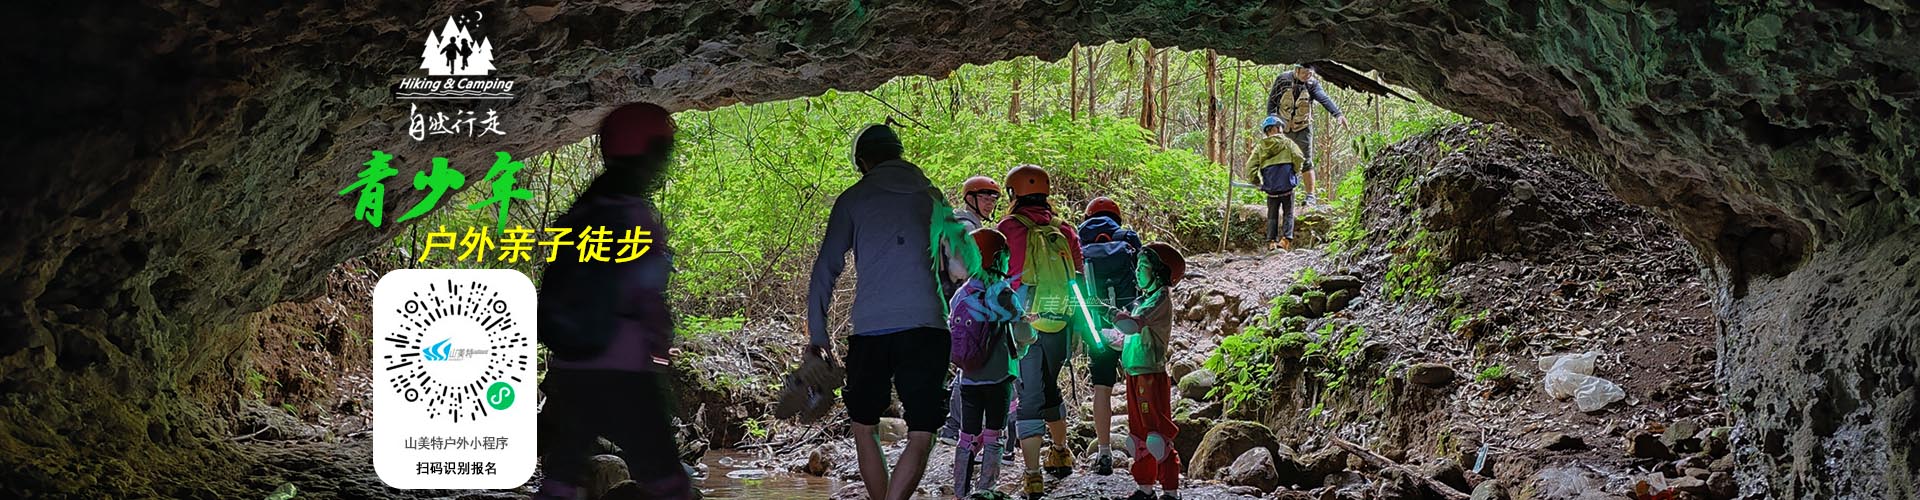  Hiking & Camping 兒童自然行走及戶外教育